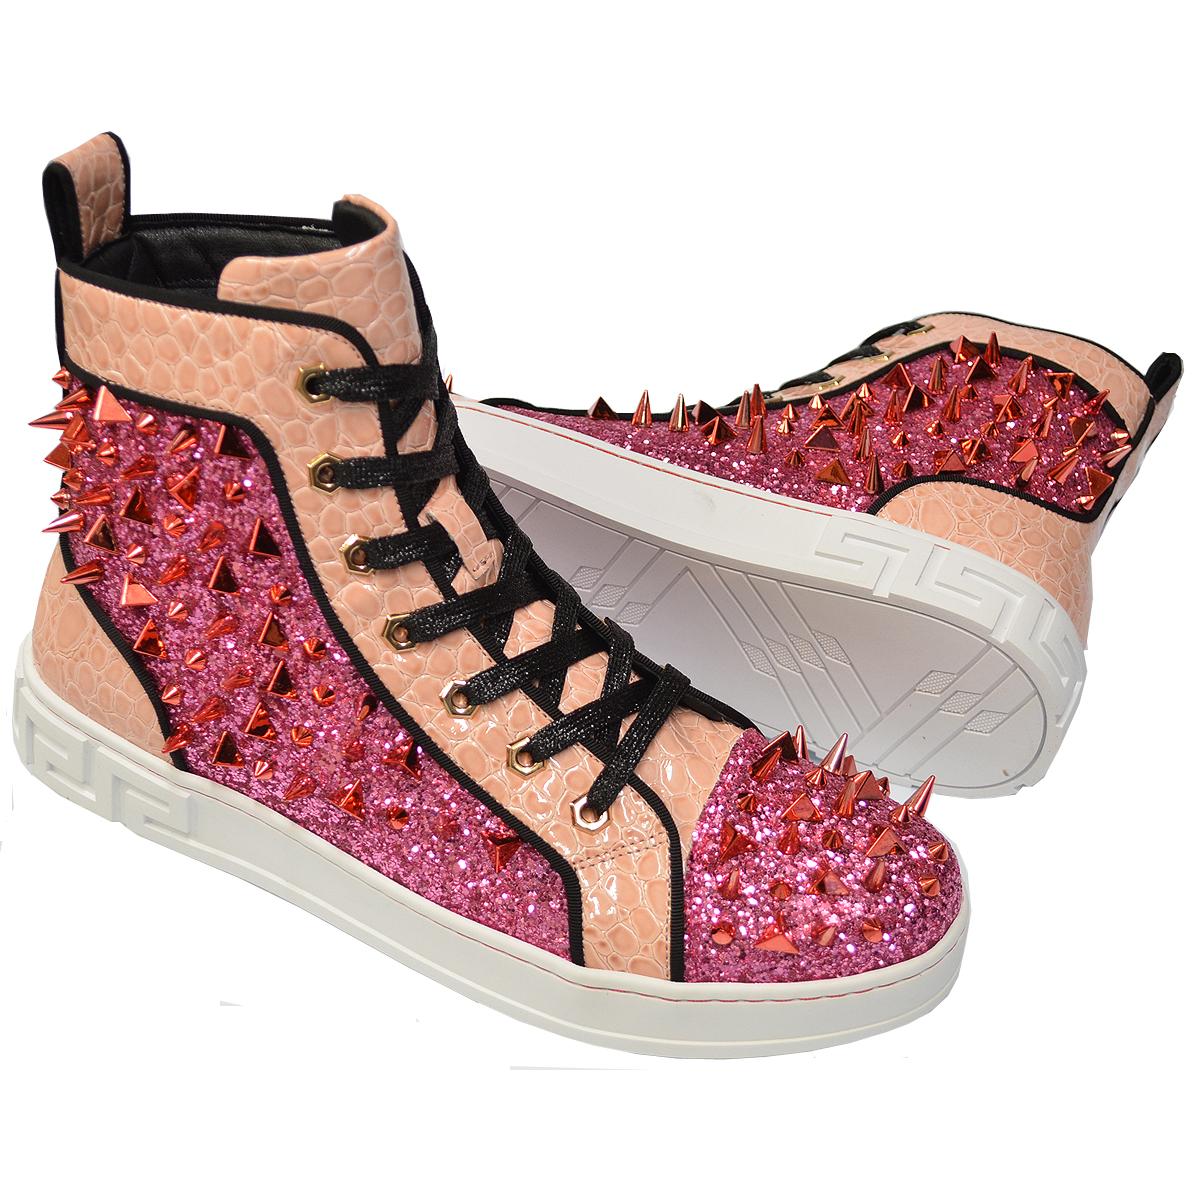 Fiesso / Fuchsia / Glitter / Spiked Leather High Top Sneakers FI2369 - $129.90 :: Upscale - UpscaleMenswear.com